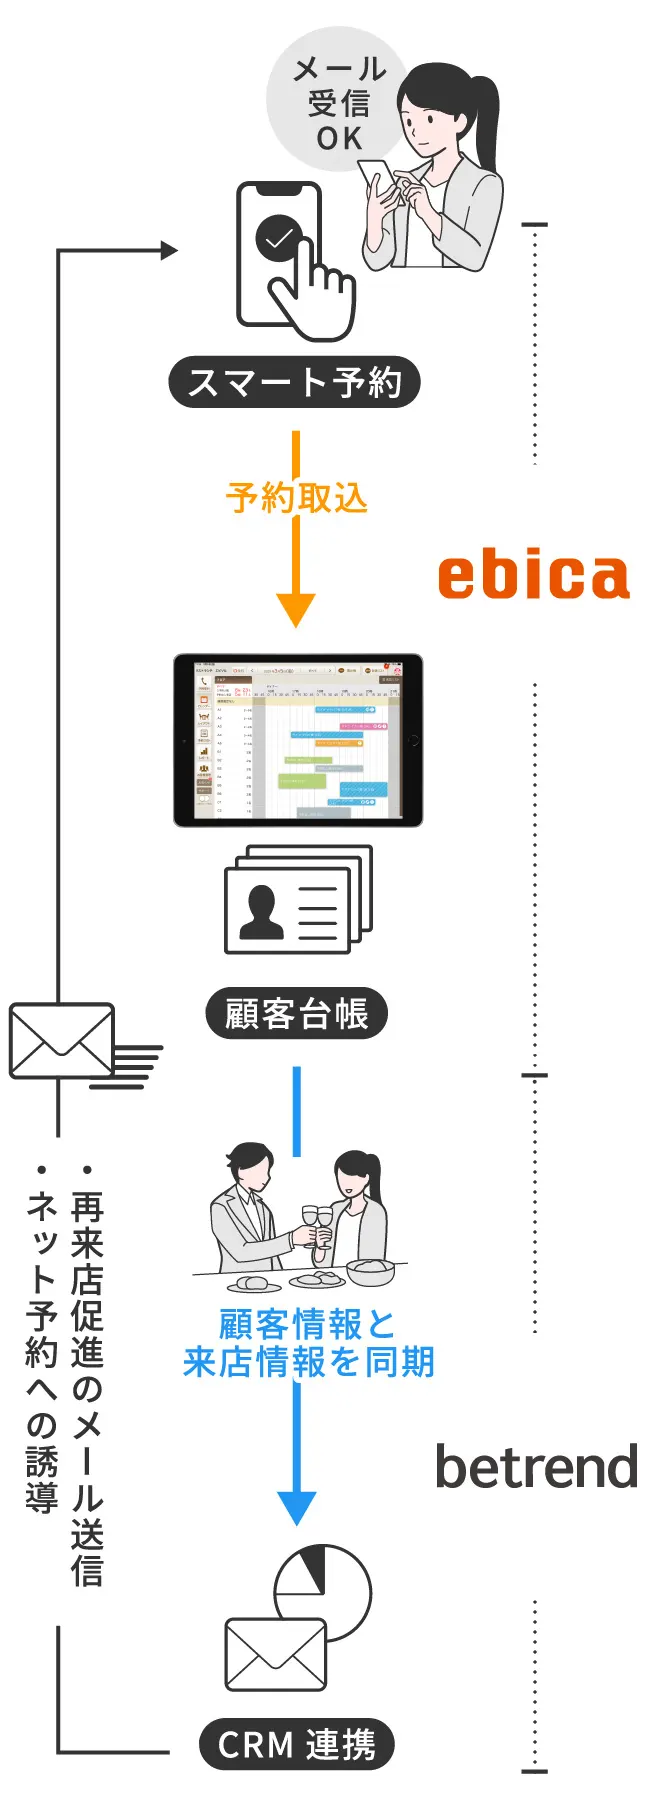 「ebica」の「betrendメールマーケティングプラン」連携説明図